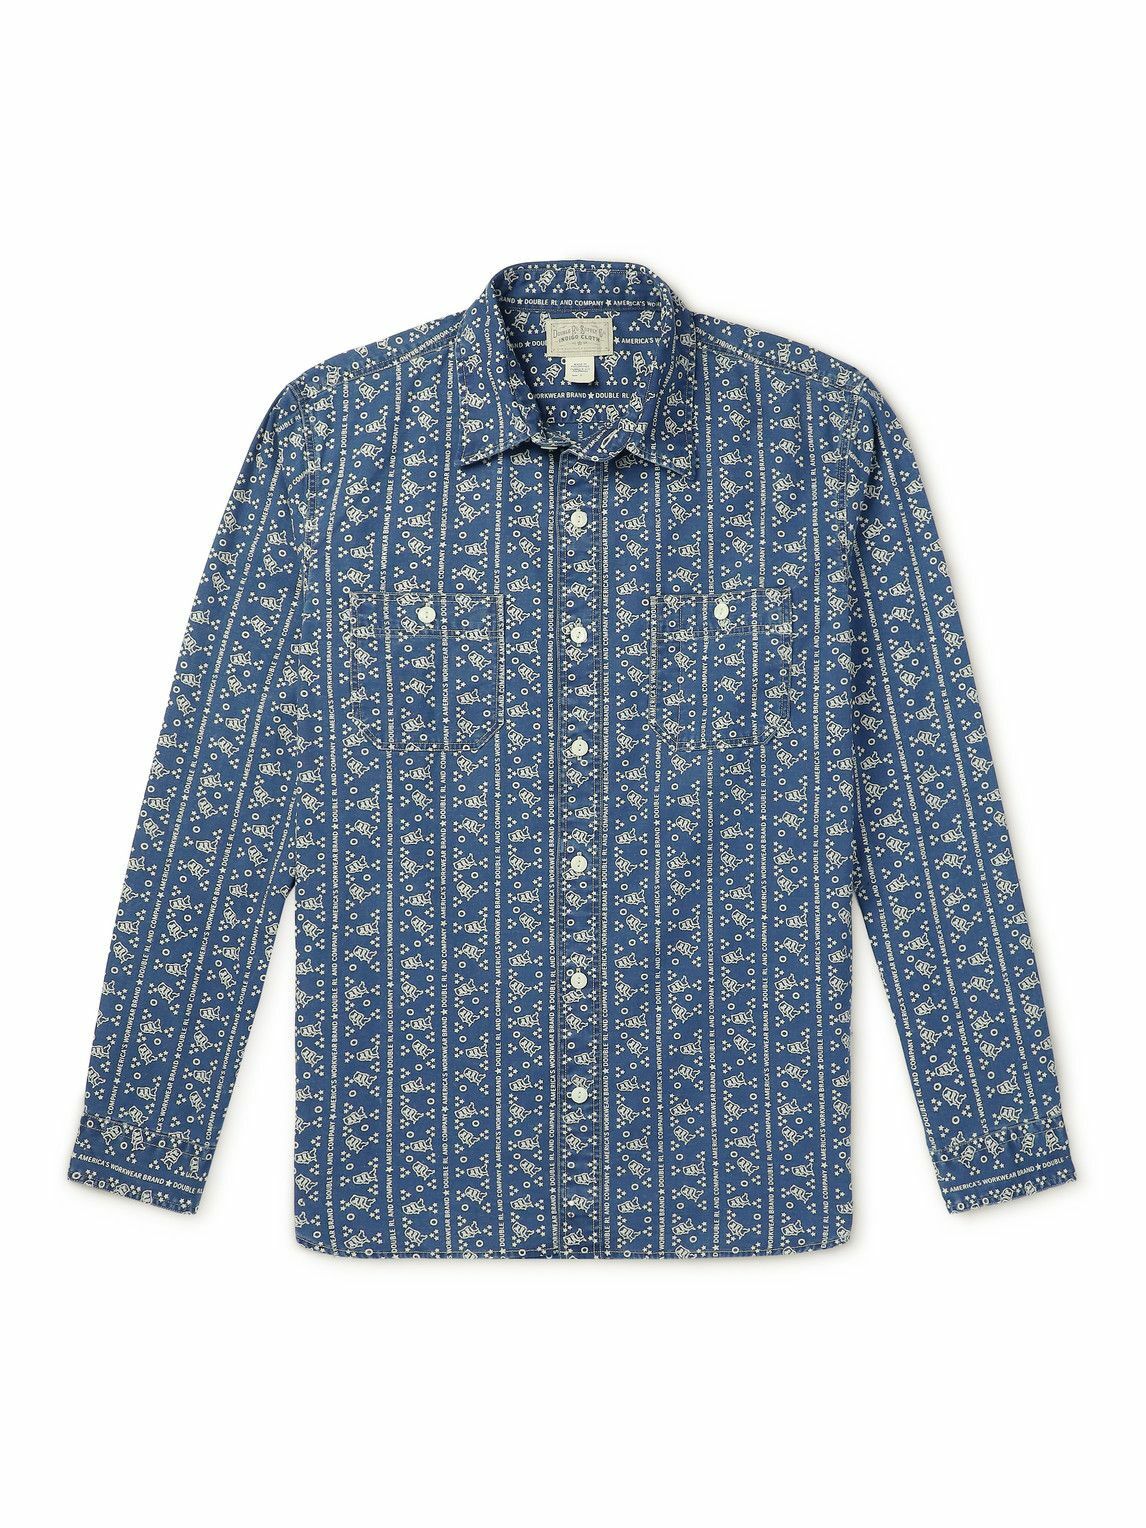 RRL - Indigo-Dyed Logo-Print Cotton-Twill Shirt - Blue RRL